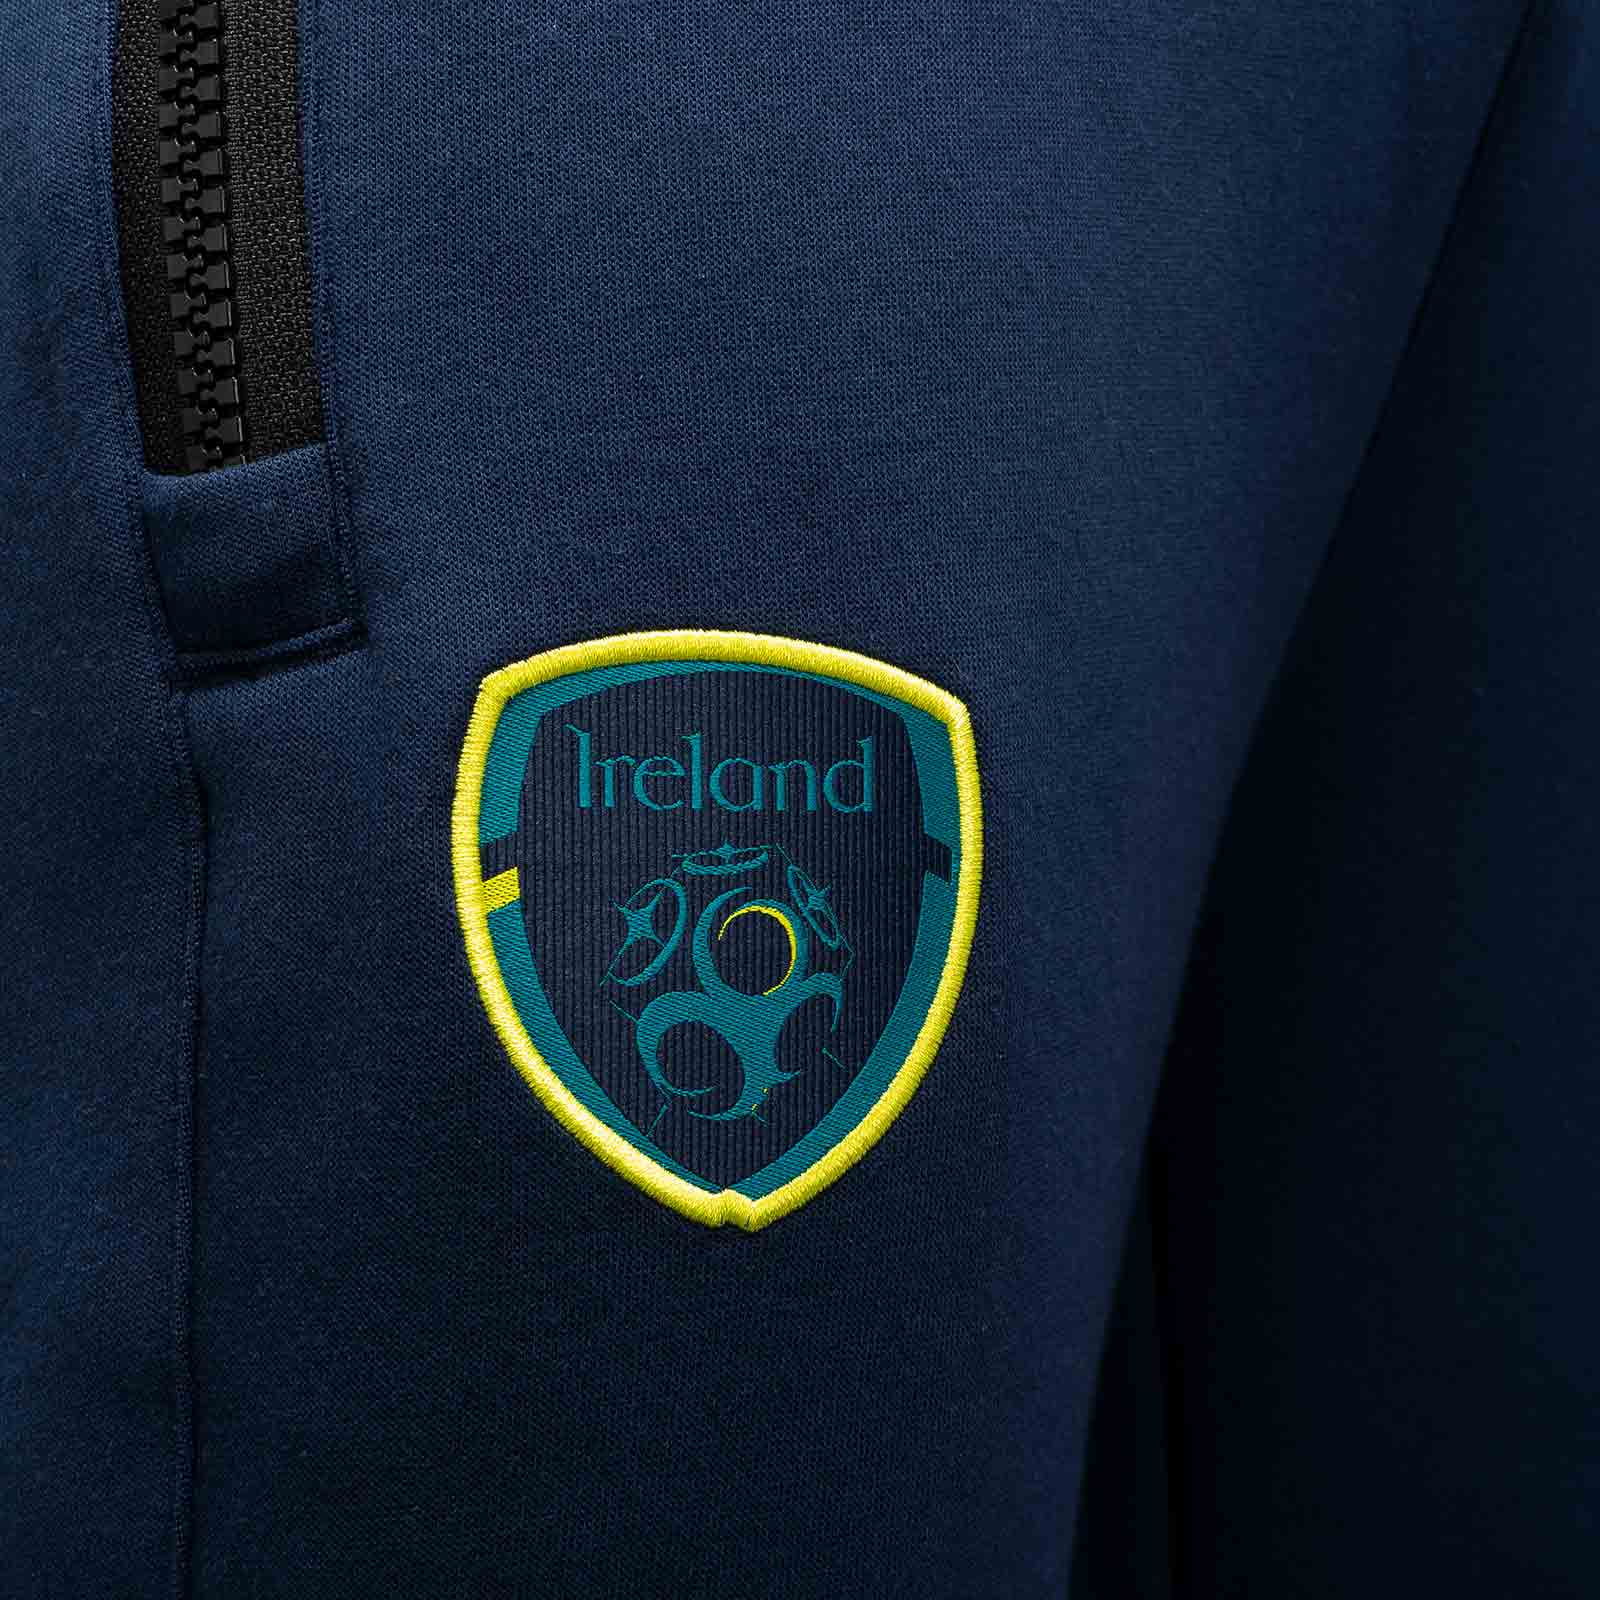 UMBRO IRELAND FAI 2022 TRAVEL PANTS